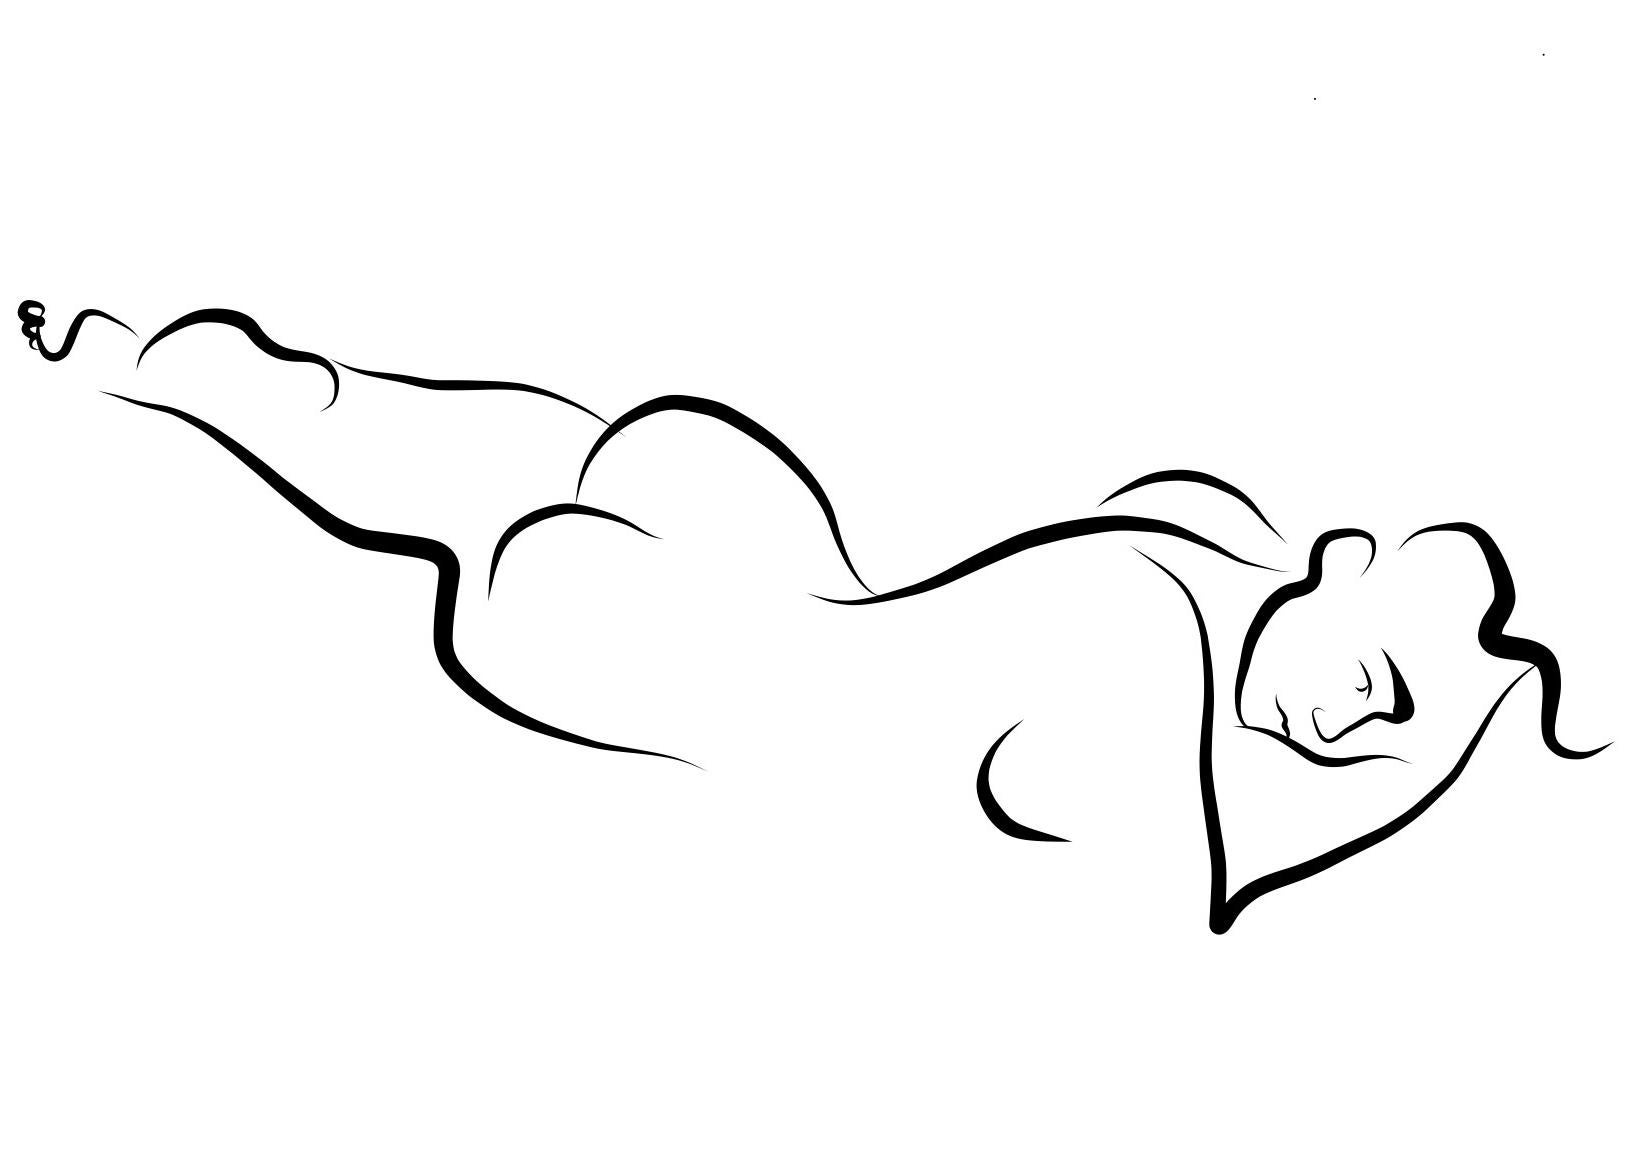 Michael Binkley Nude Print - Haiku #1, 1/50 - Digital Vector Drawing Reclining Female Nude Woman Figure